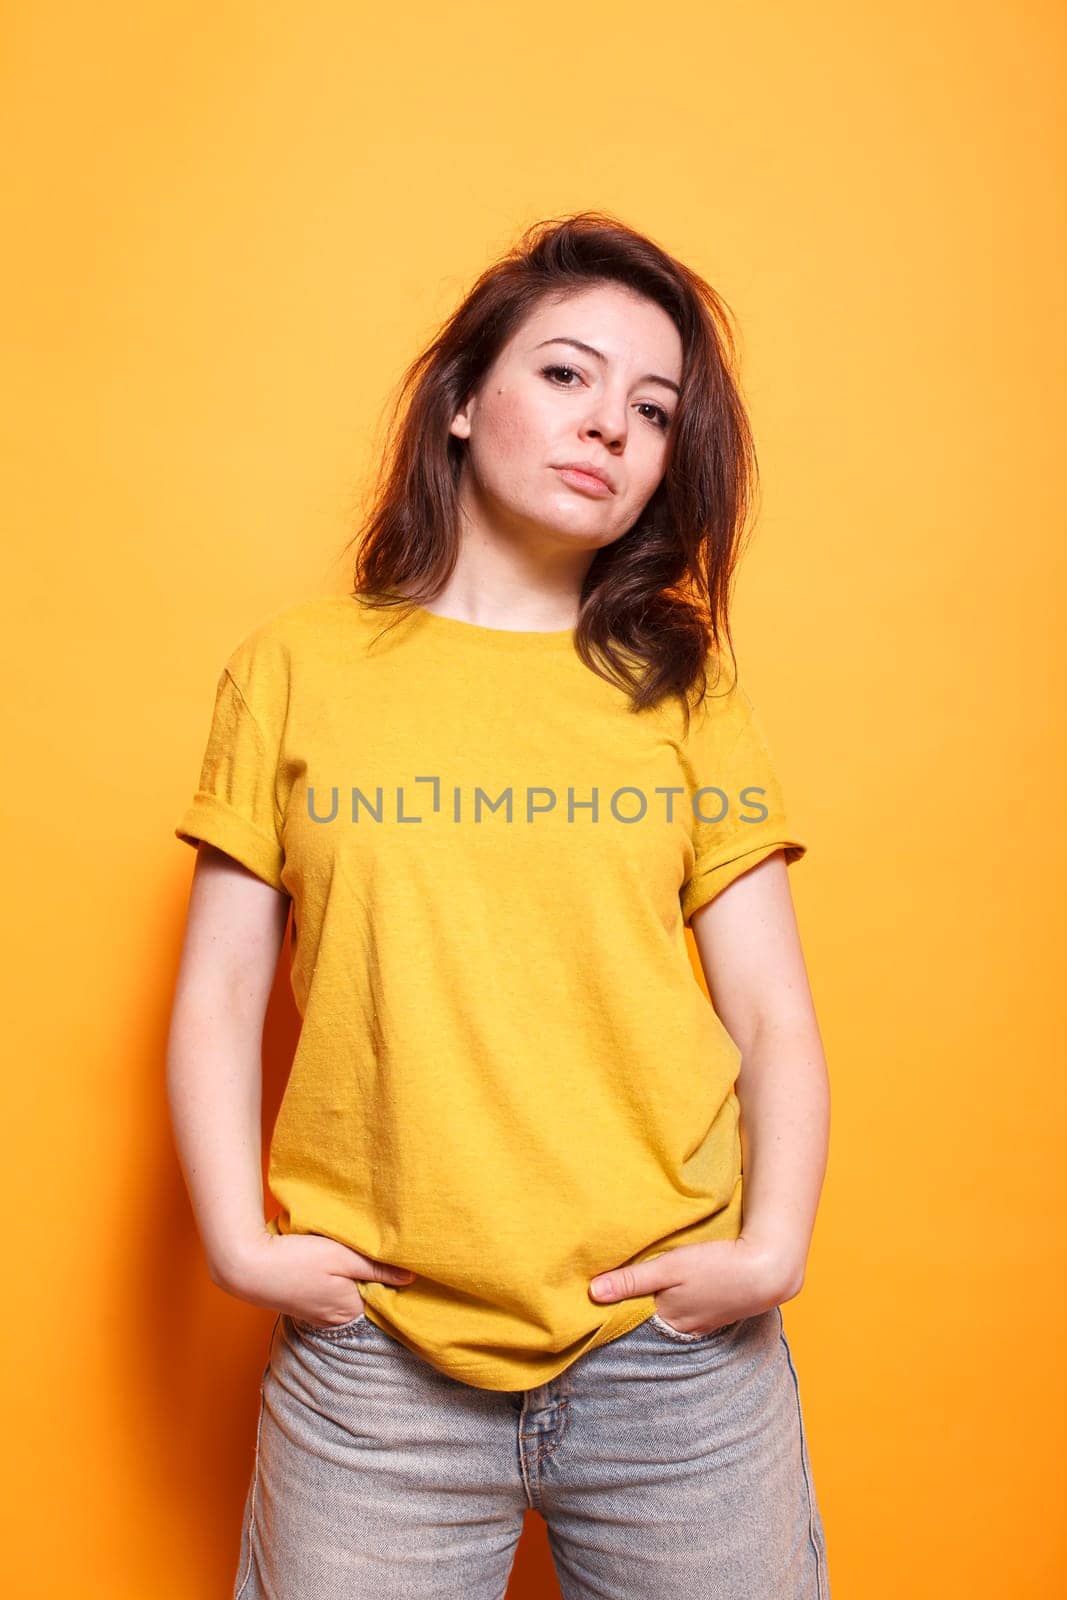 Confident woman on orange background by DCStudio